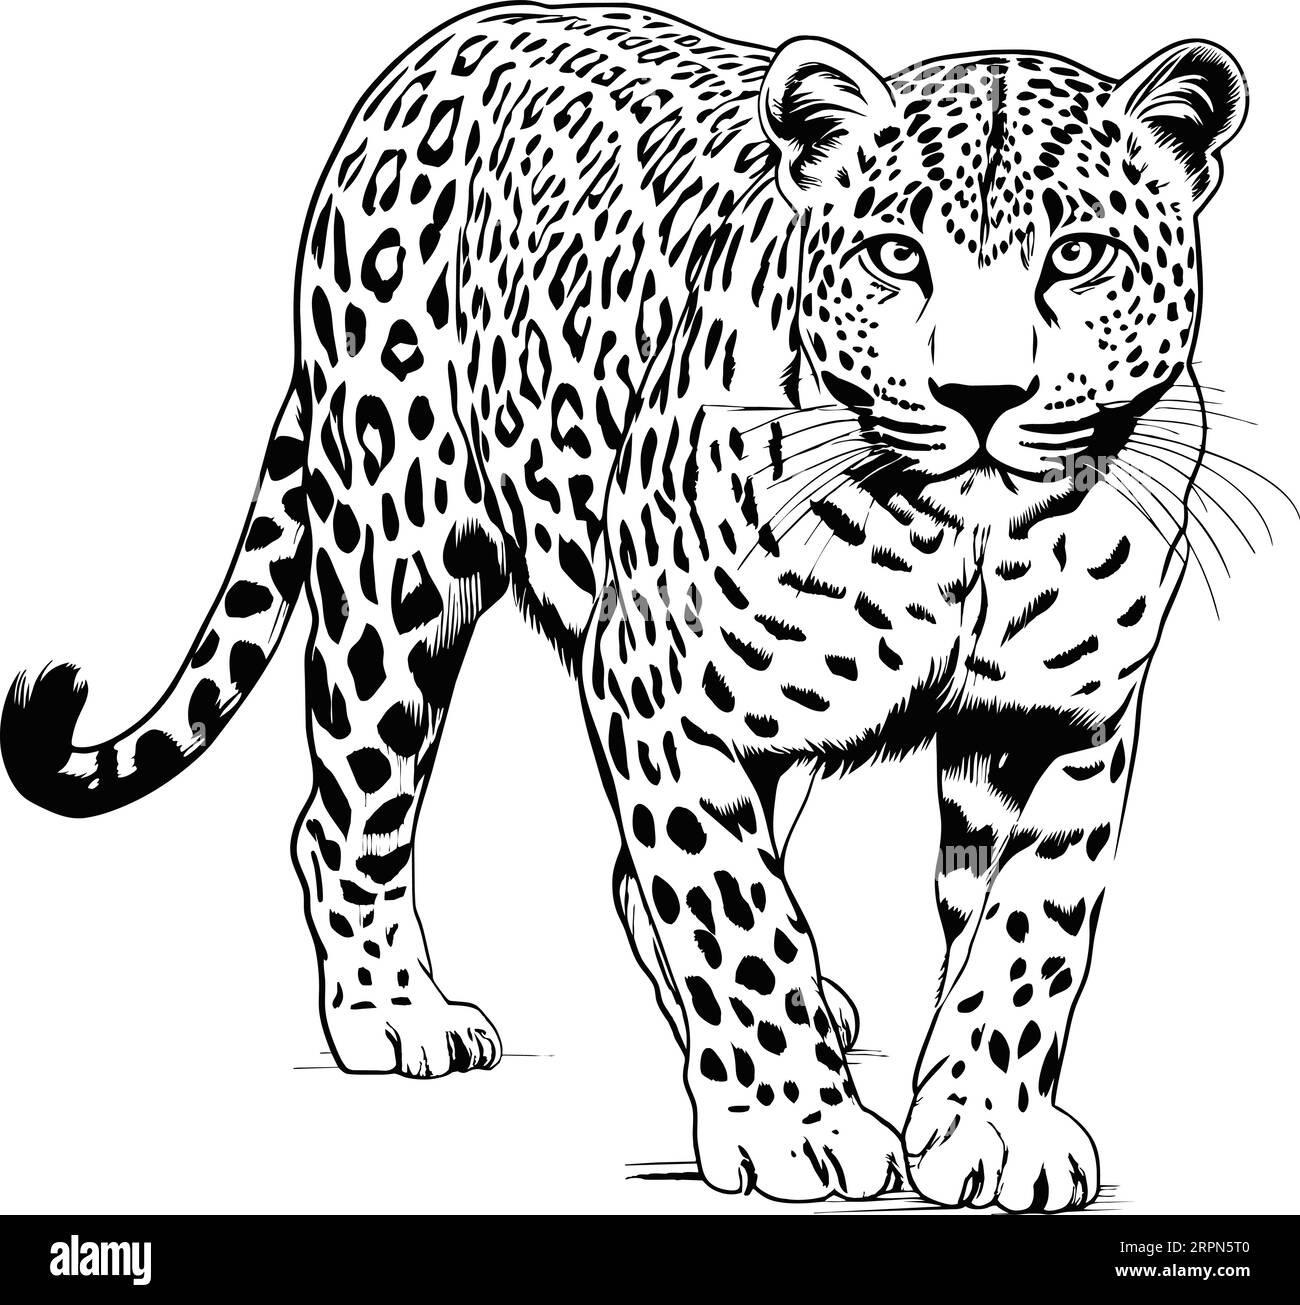 Zoo. African fauna. Puma, leopard, wild cat, coguar, mountain lion. Hand drawn illustration for tattoo design, emblem, badge, t-shirt print. Engraving Stock Vector